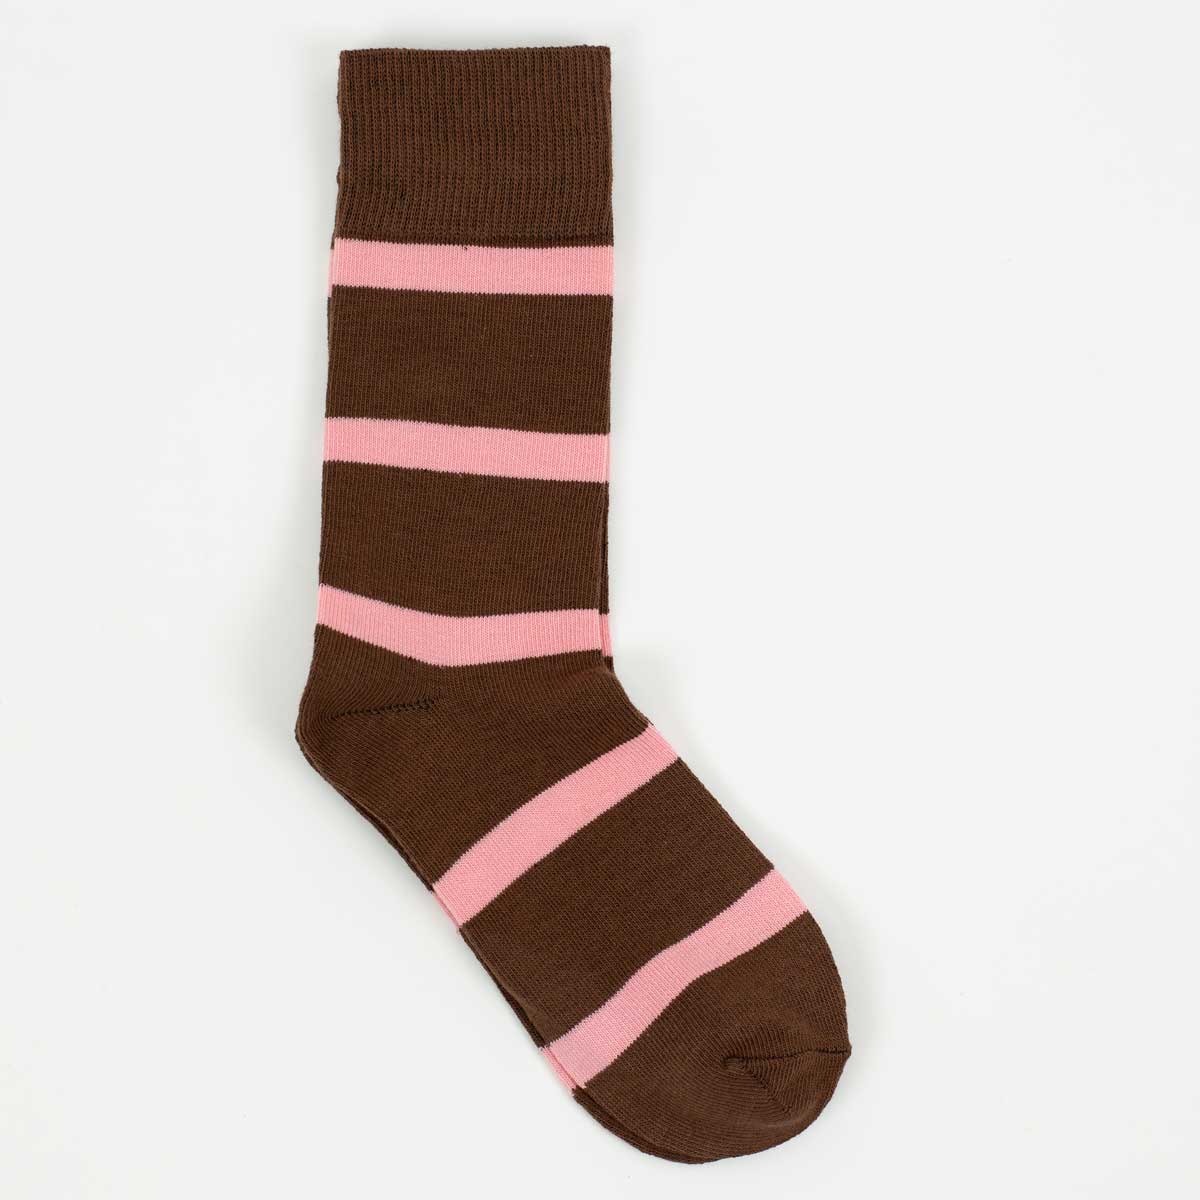 AWOC Socks, brown/pink